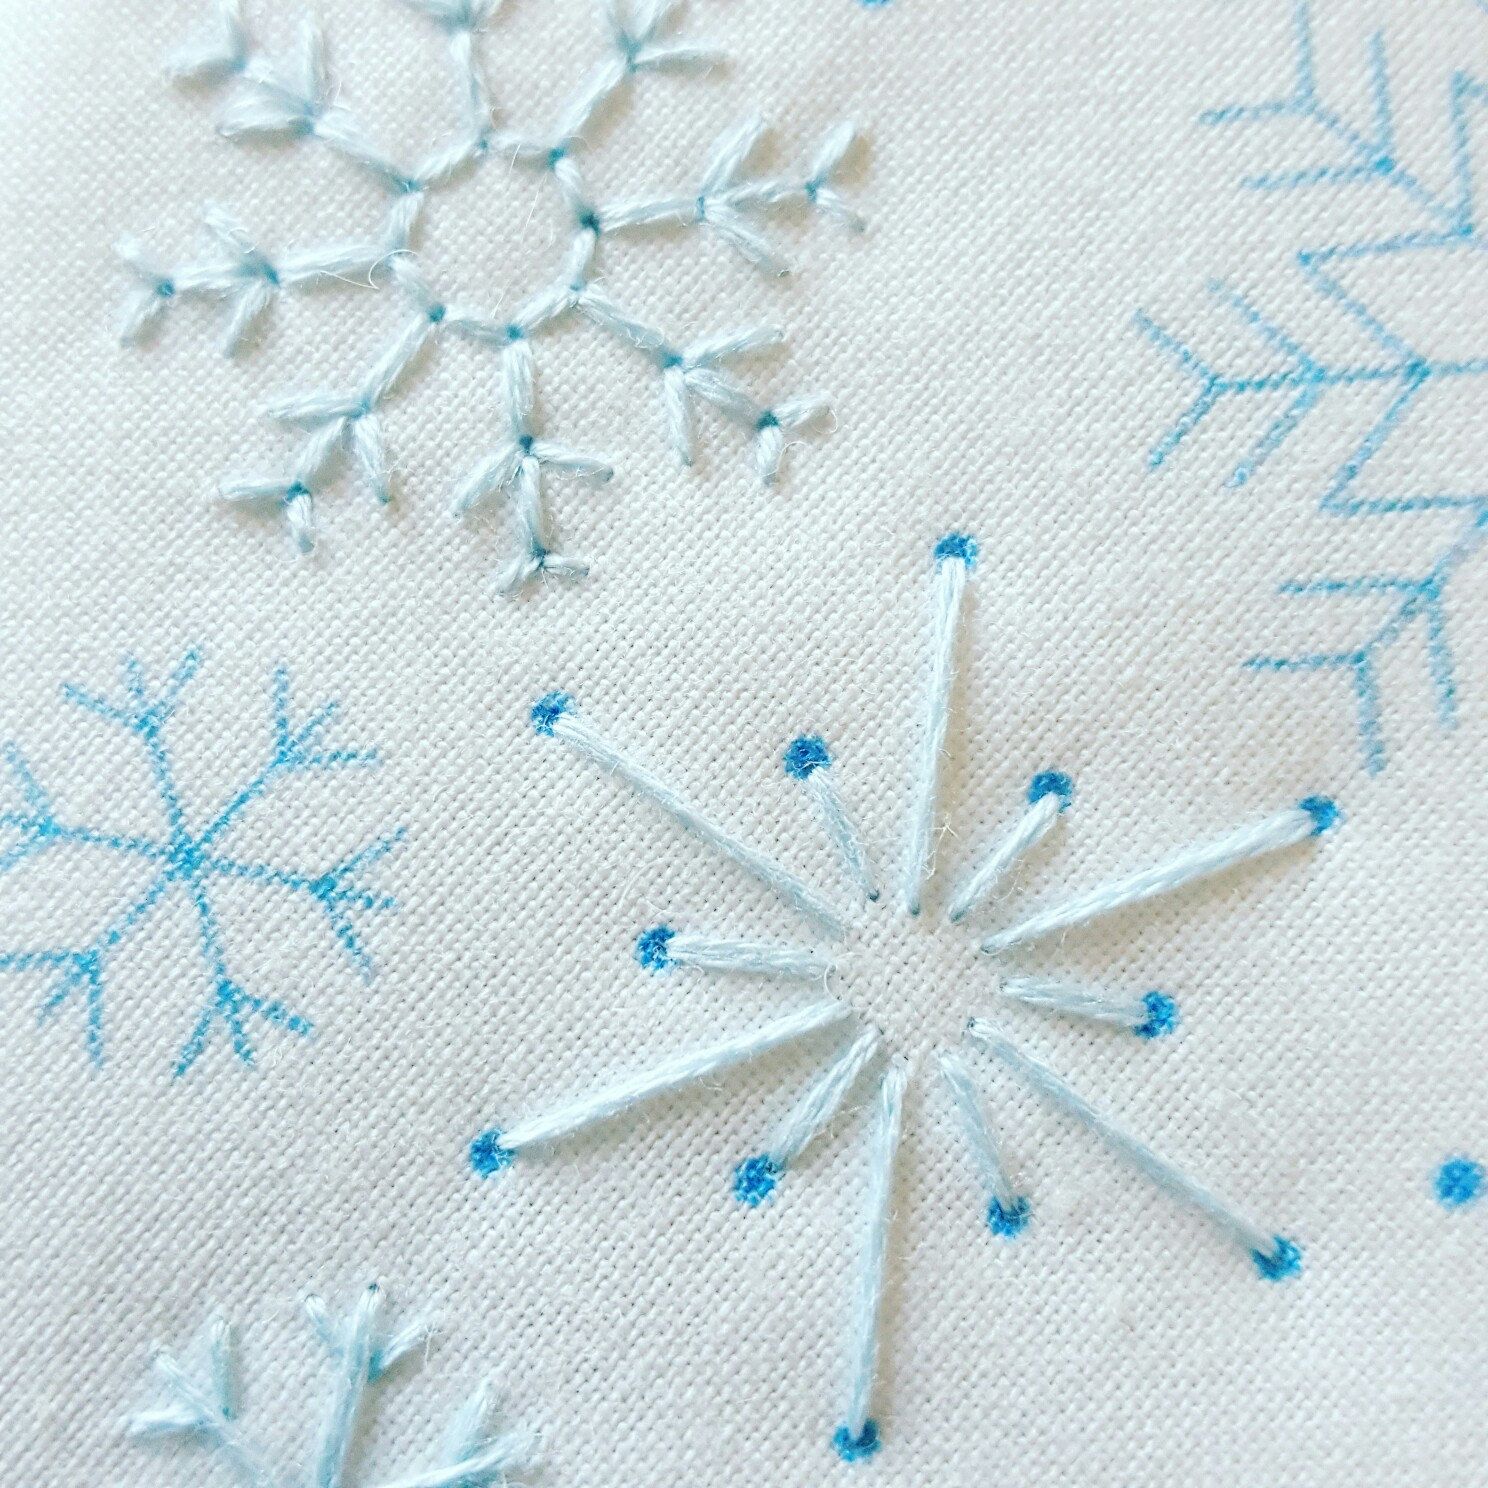 Снежинки на одежде